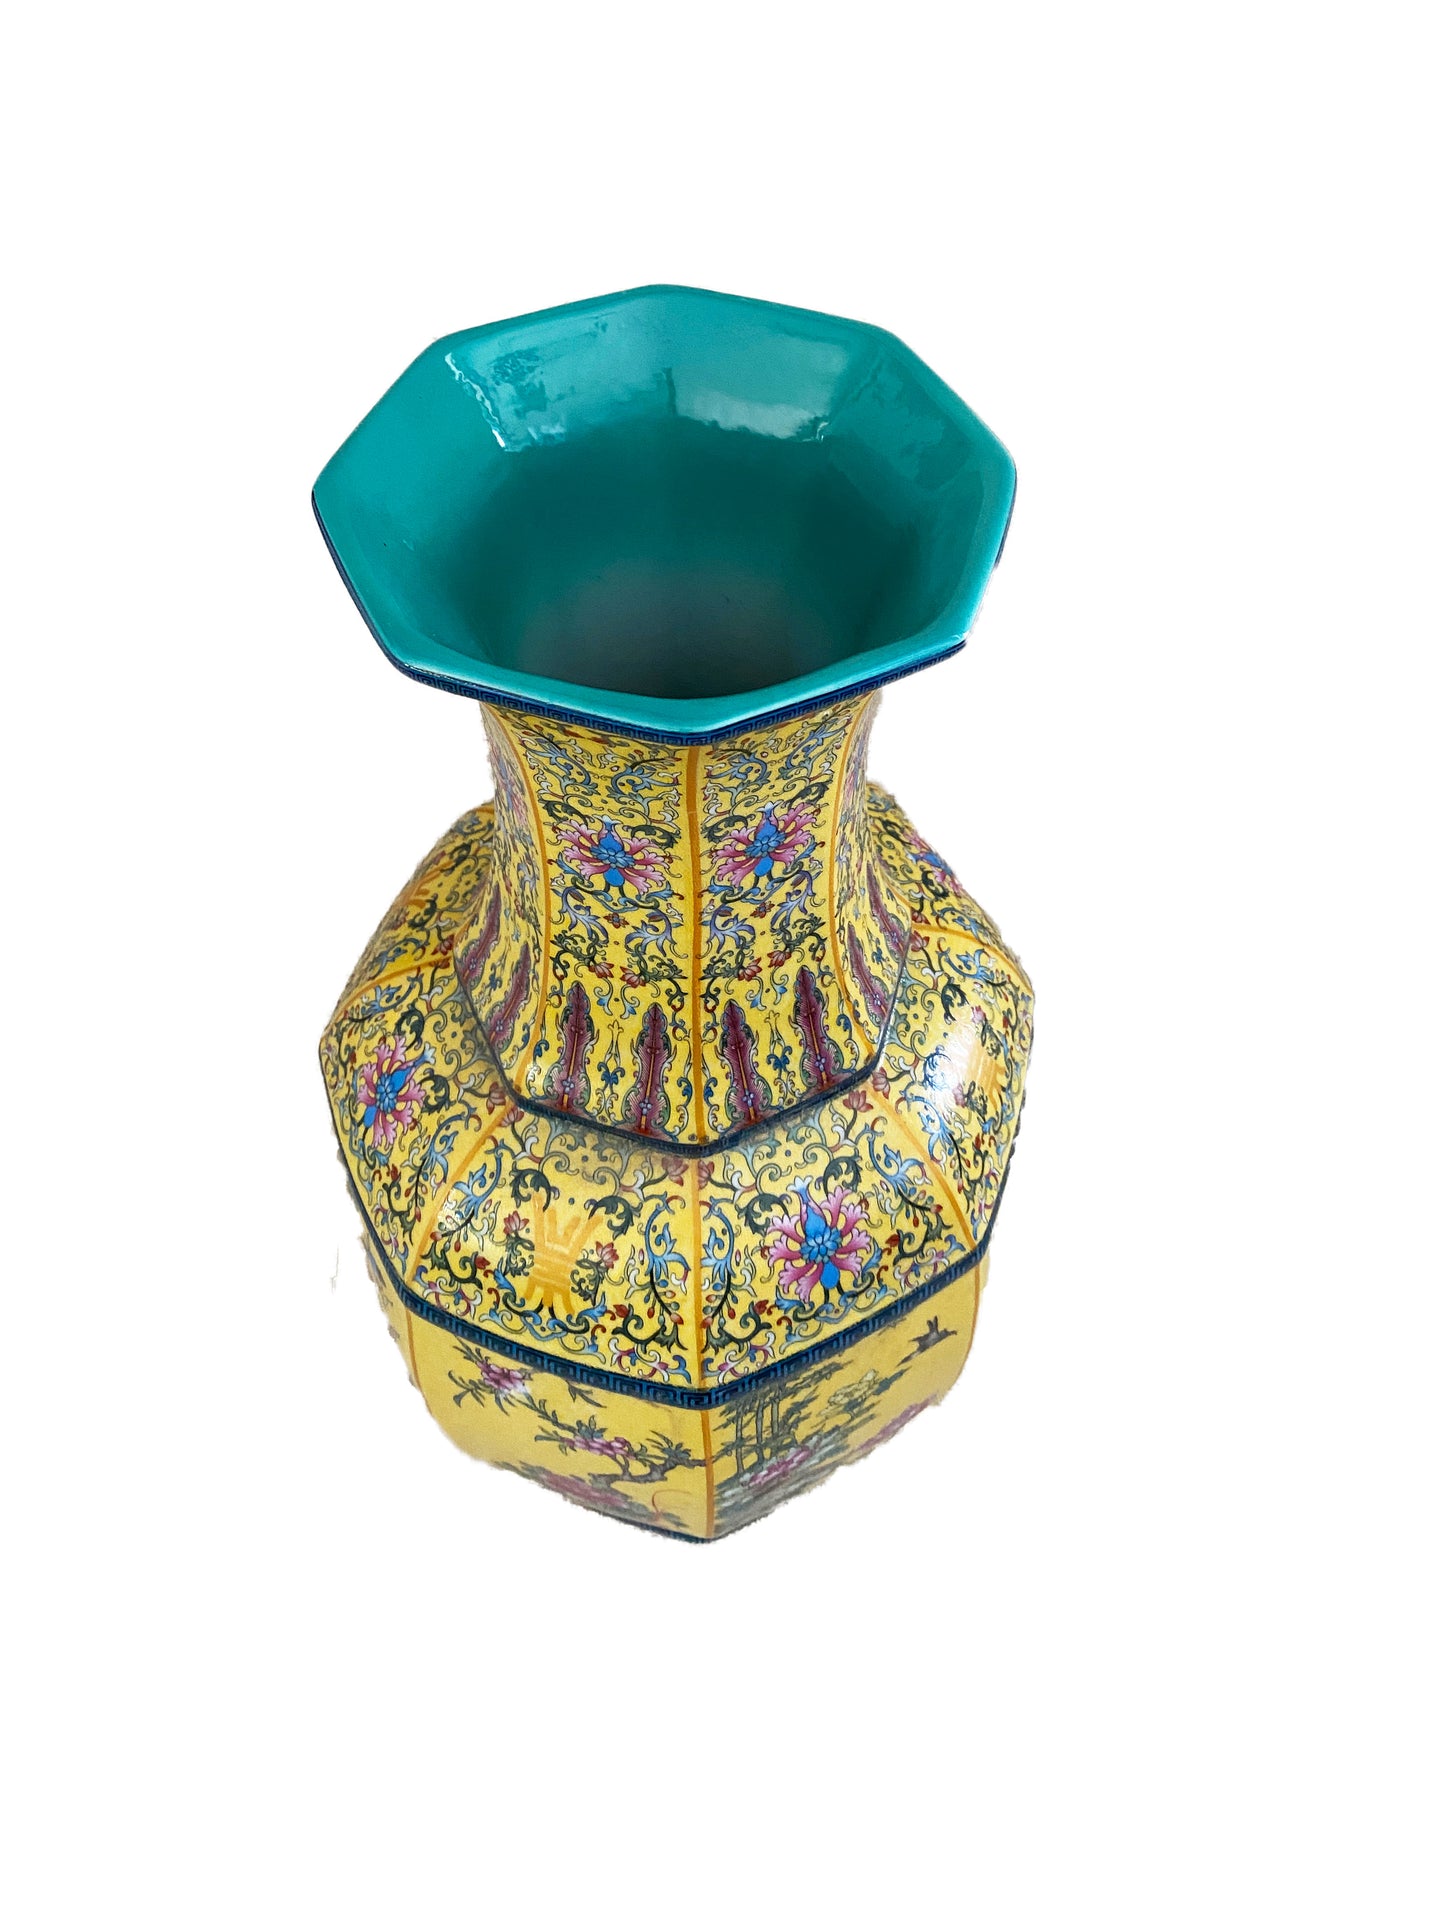 # 3133 Famille Jaune Hexagonal Shaped Vase 20" H